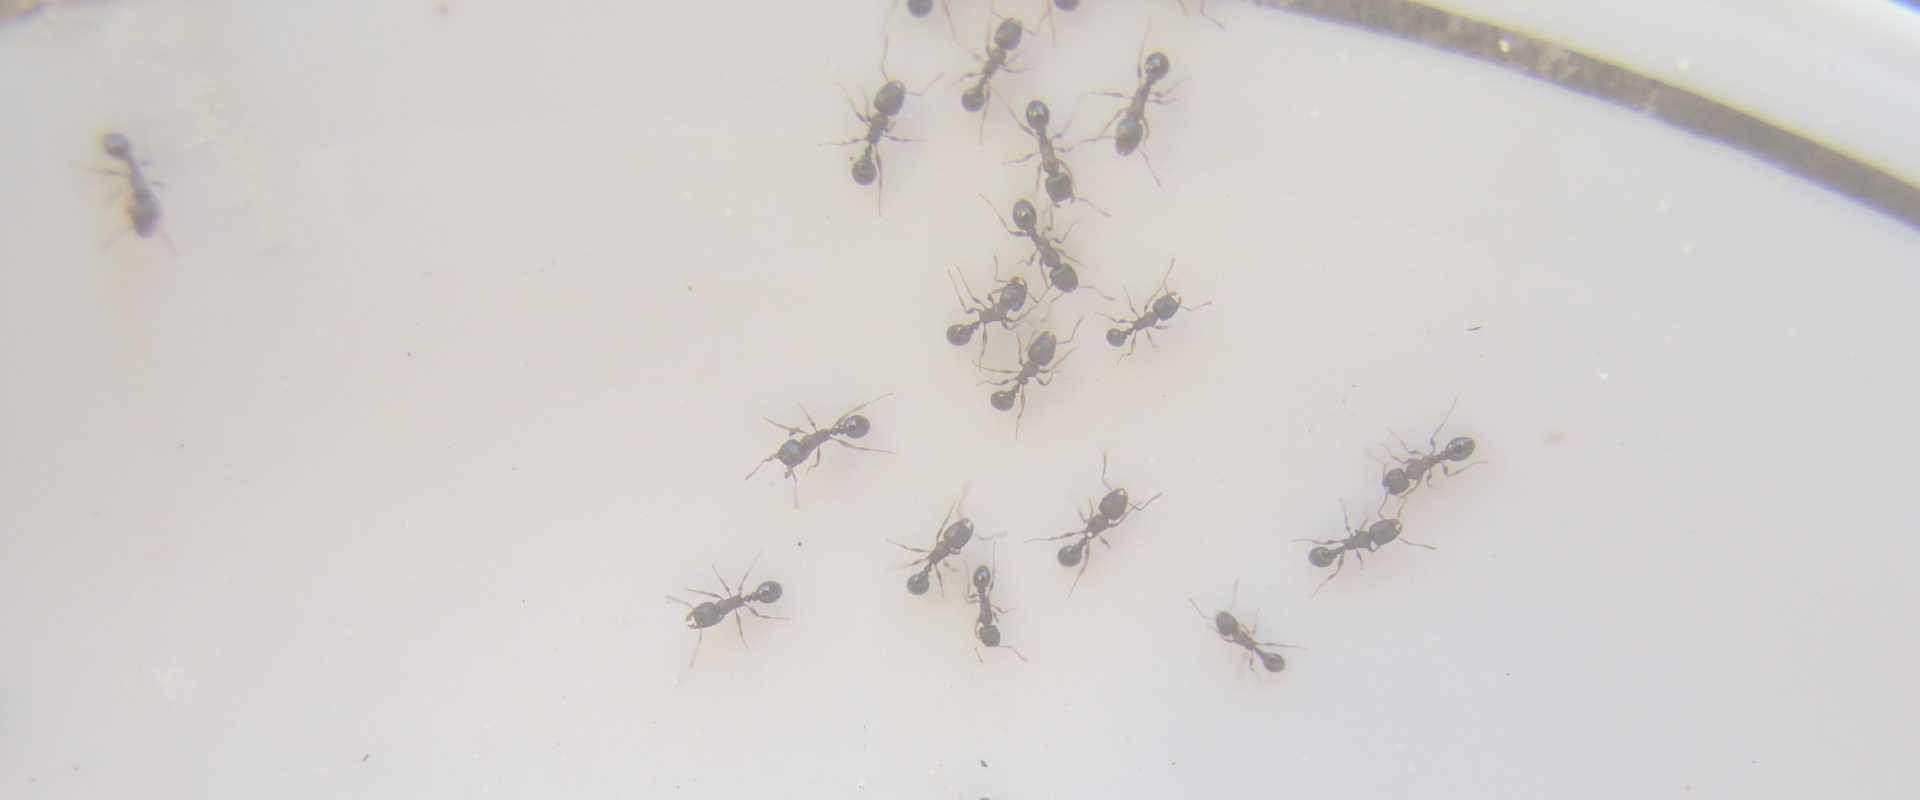 pest control in nottingham md